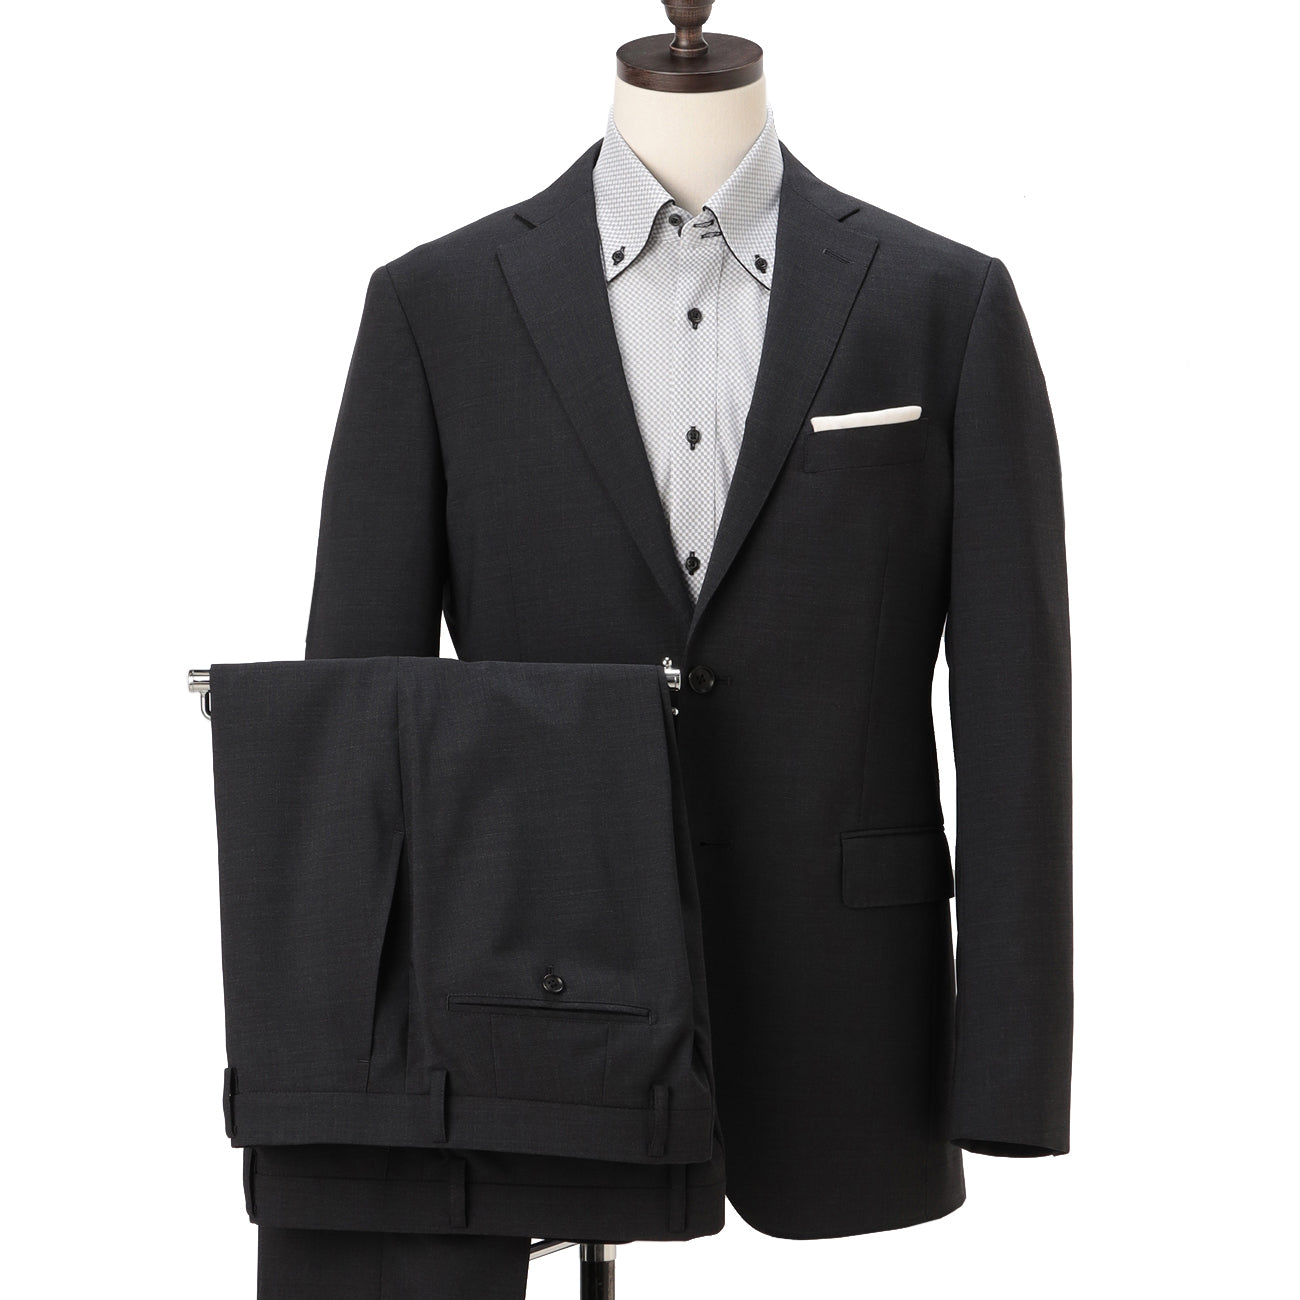 Aircool Two-pants Chacoal Gray Stripe British Slim Suit